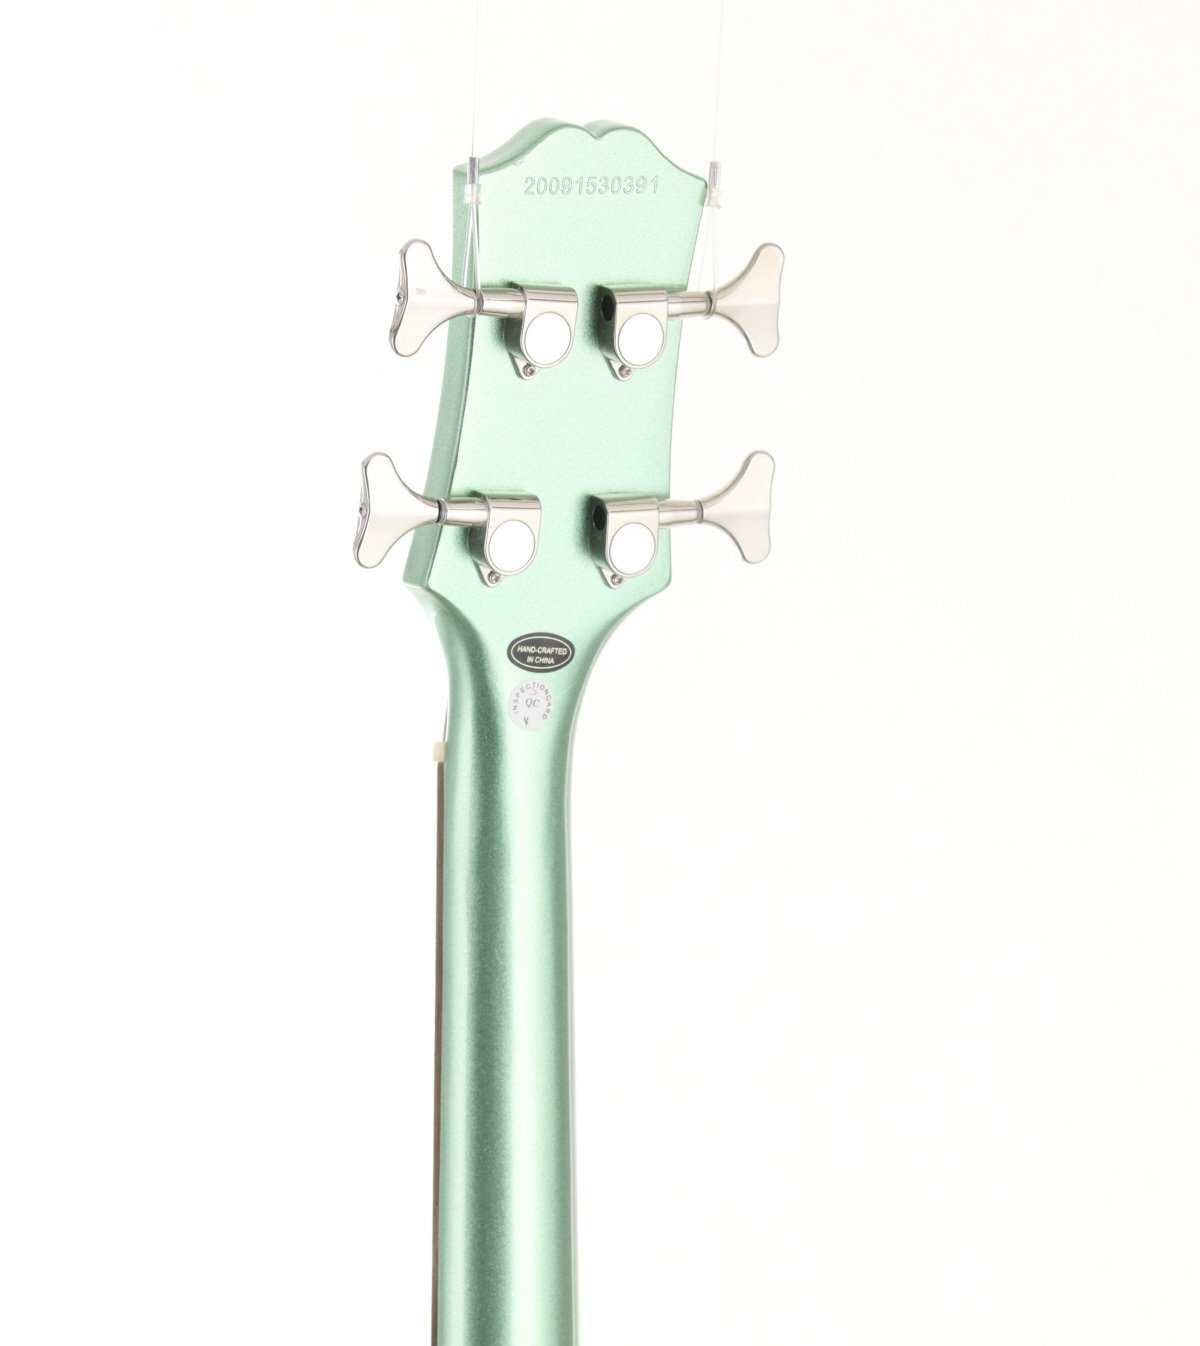 [SN 20091530391] USED Epiphone / Embassy Bass Wanderlust Green Metallic [03]